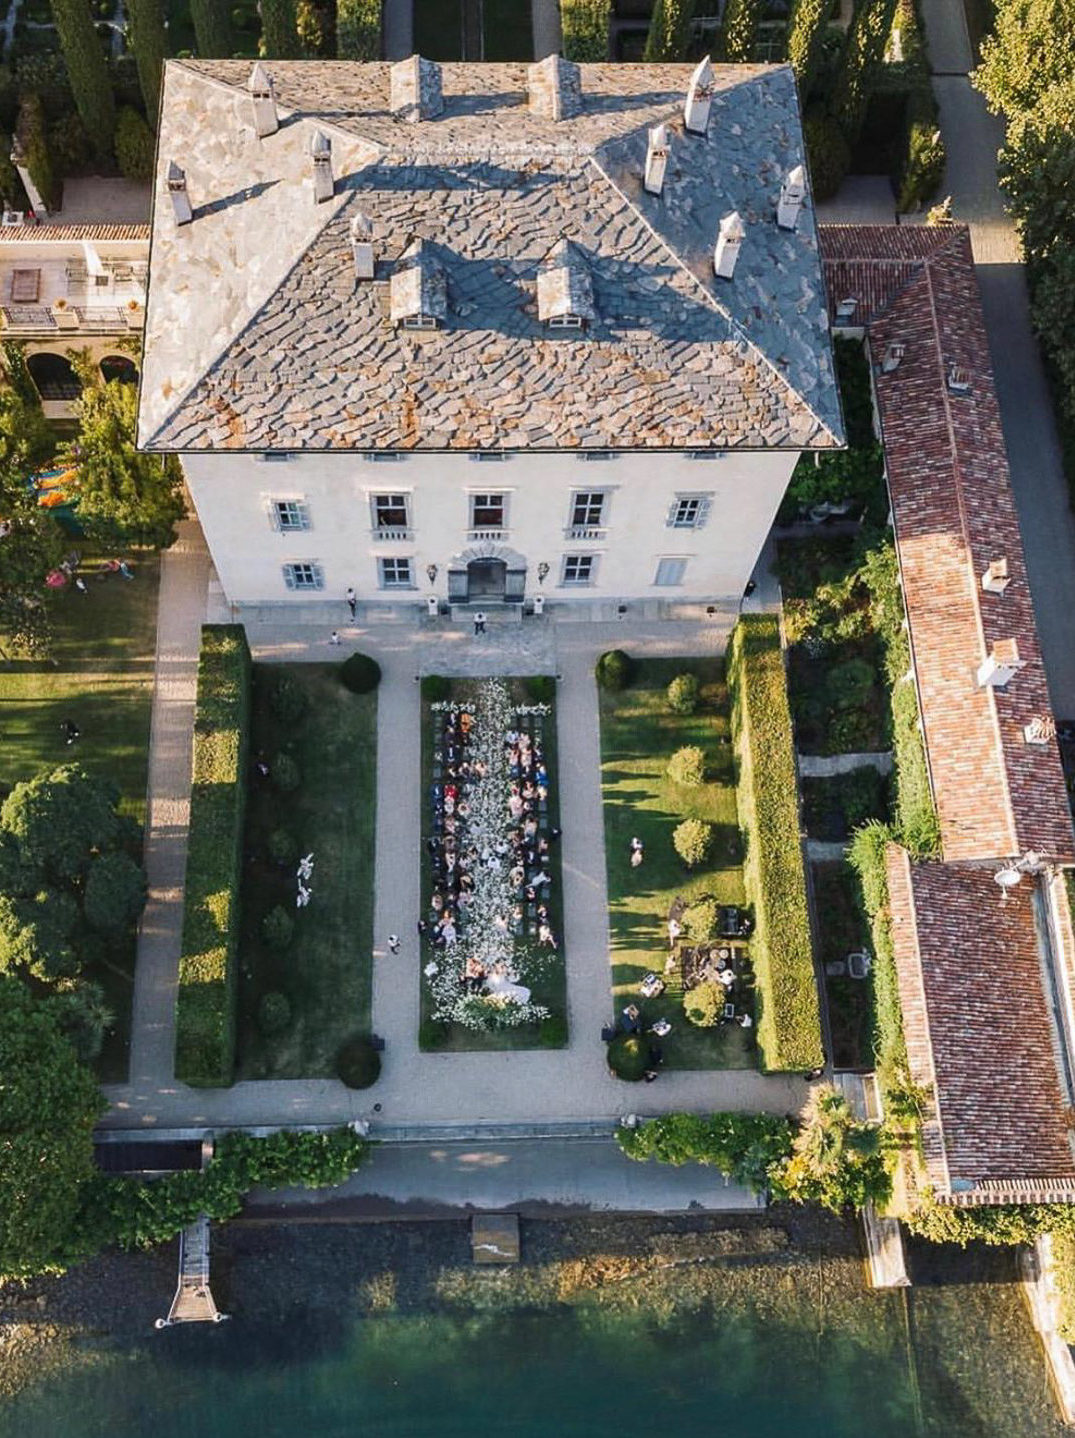 Villa-Balbiano-luxury-property-Lake-Como-Italy-exclusive-private-rent-rental-best-wedding-venue-events-ceremony-place-vast-park-garden-best-view-elopment-engagement-services-e1573639522994